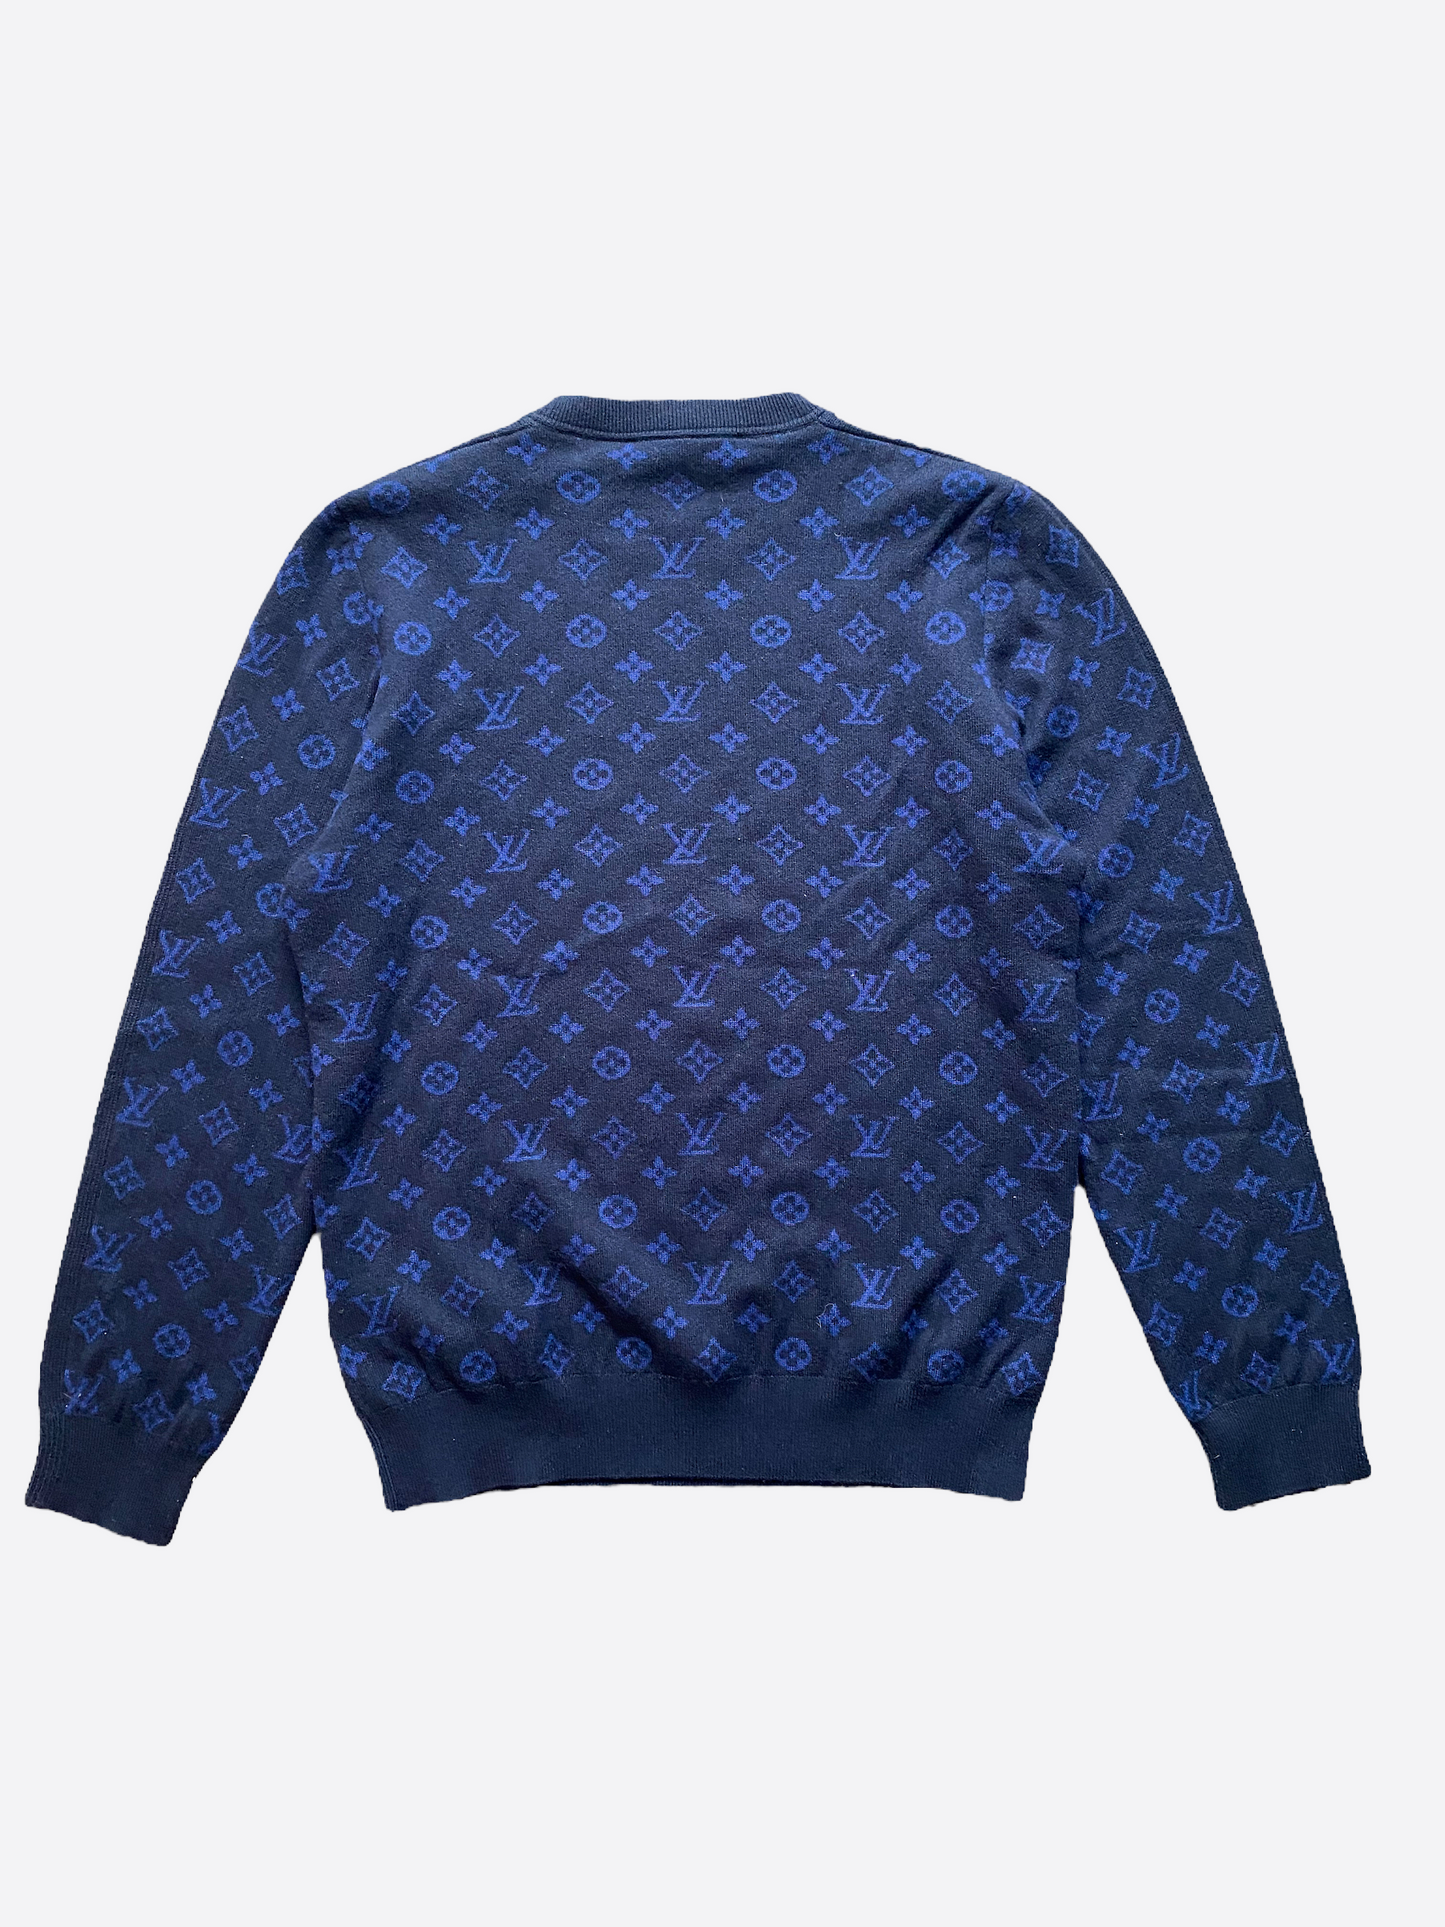 Louis Vuitton Half Monogram Cashmere Sweater